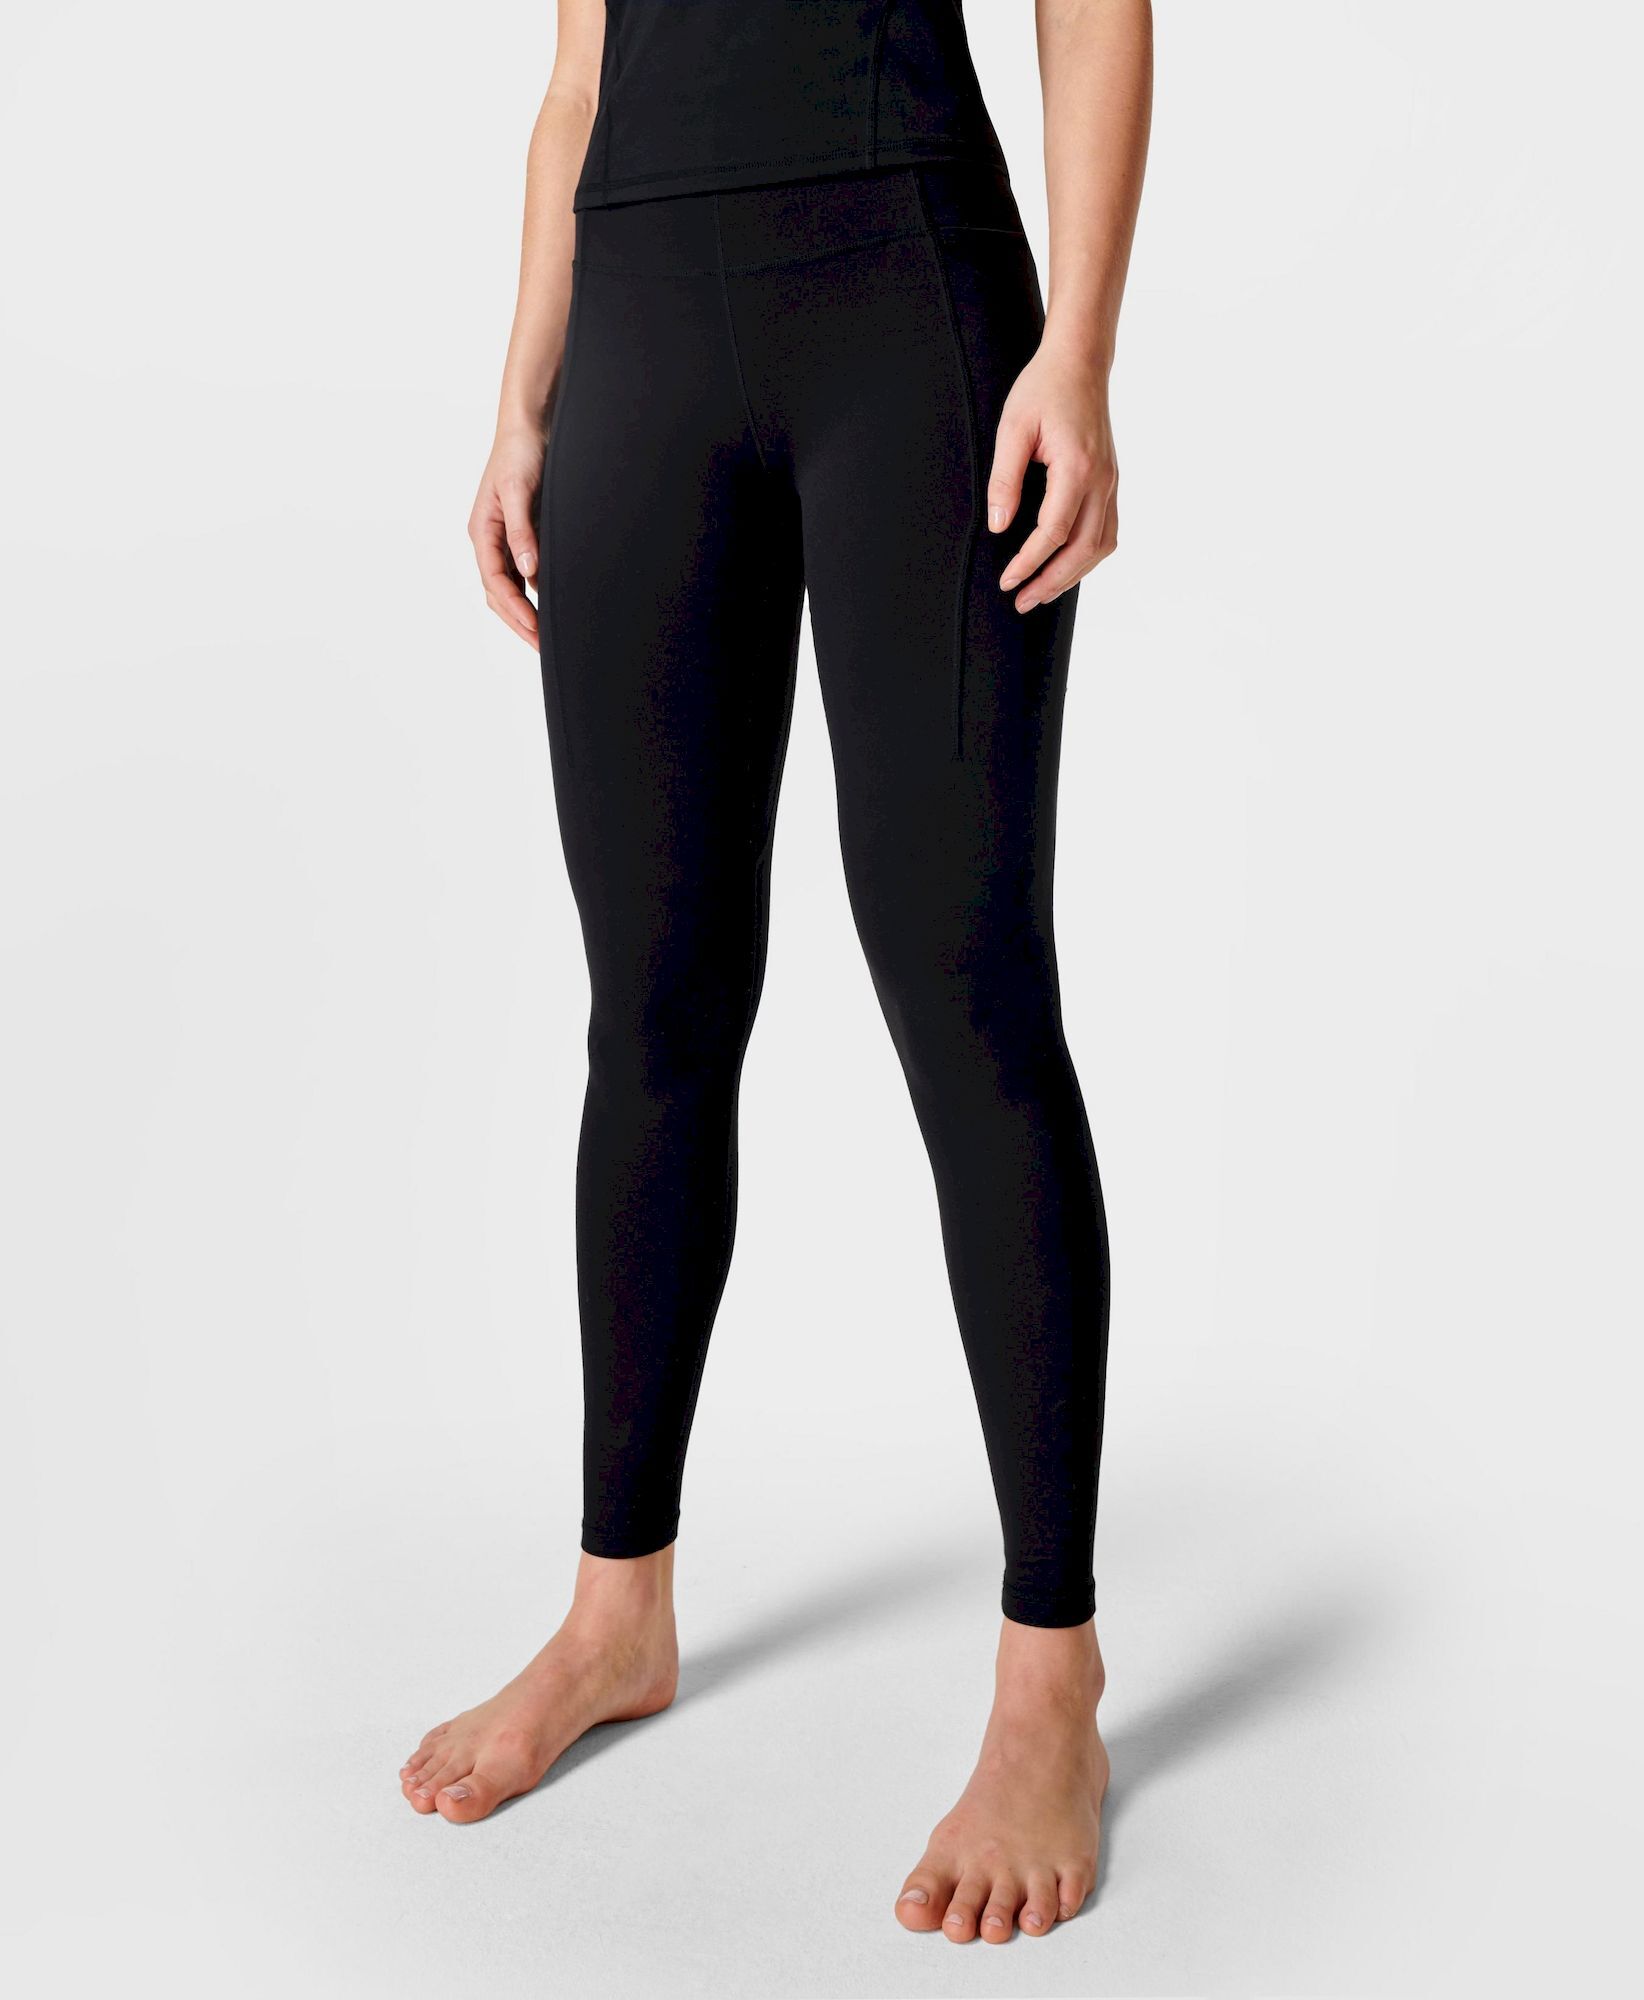 Sweaty Betty Super Soft Yoga Leggings - Yoga leggings - Mujer | Hardloop